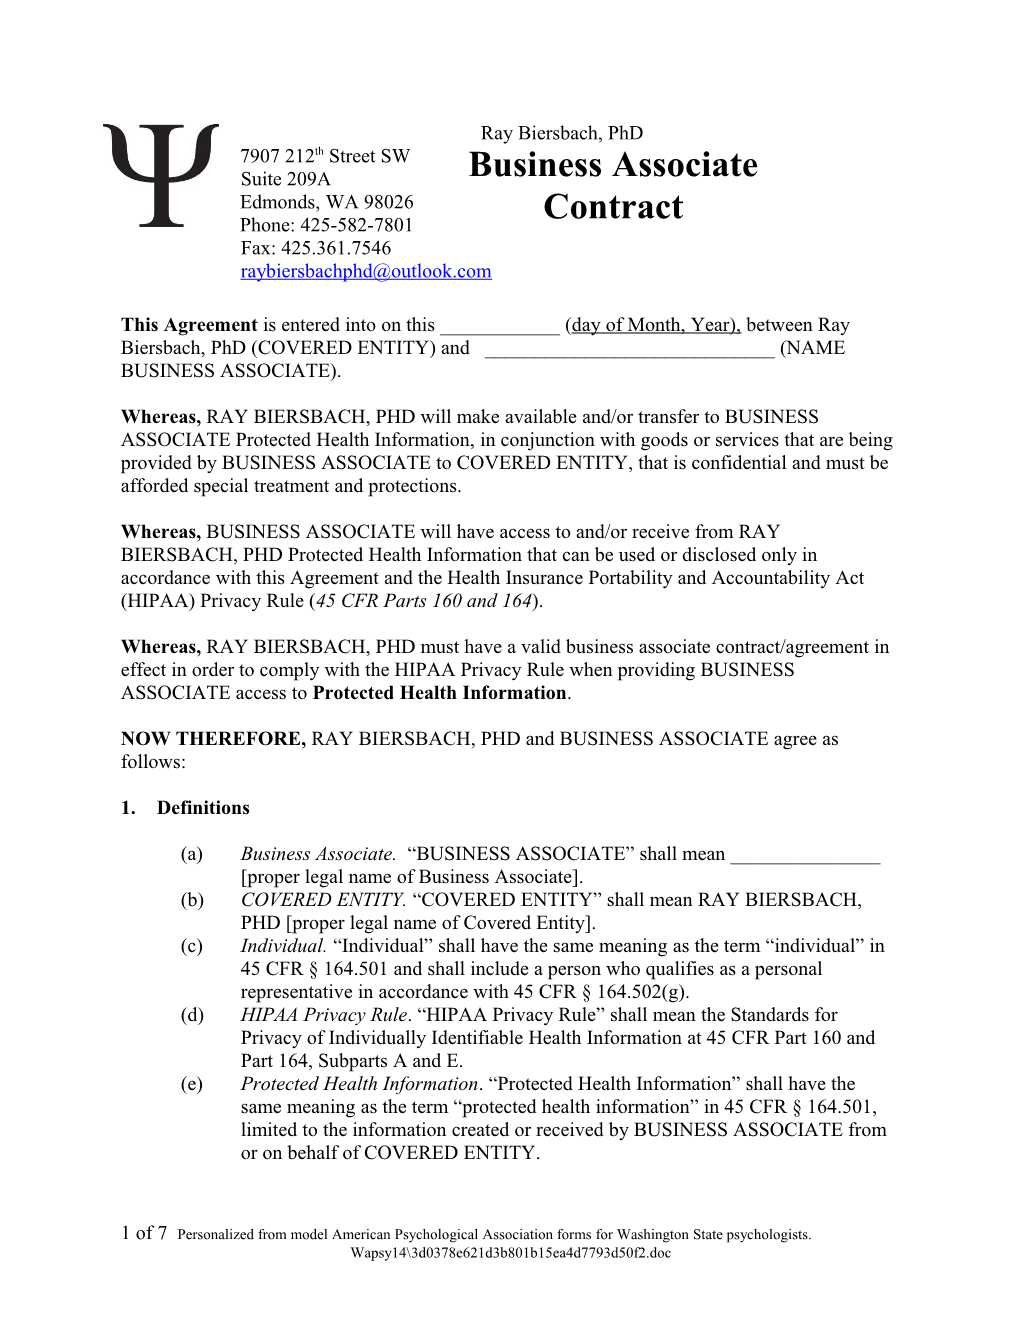 Model Business Associate Contract